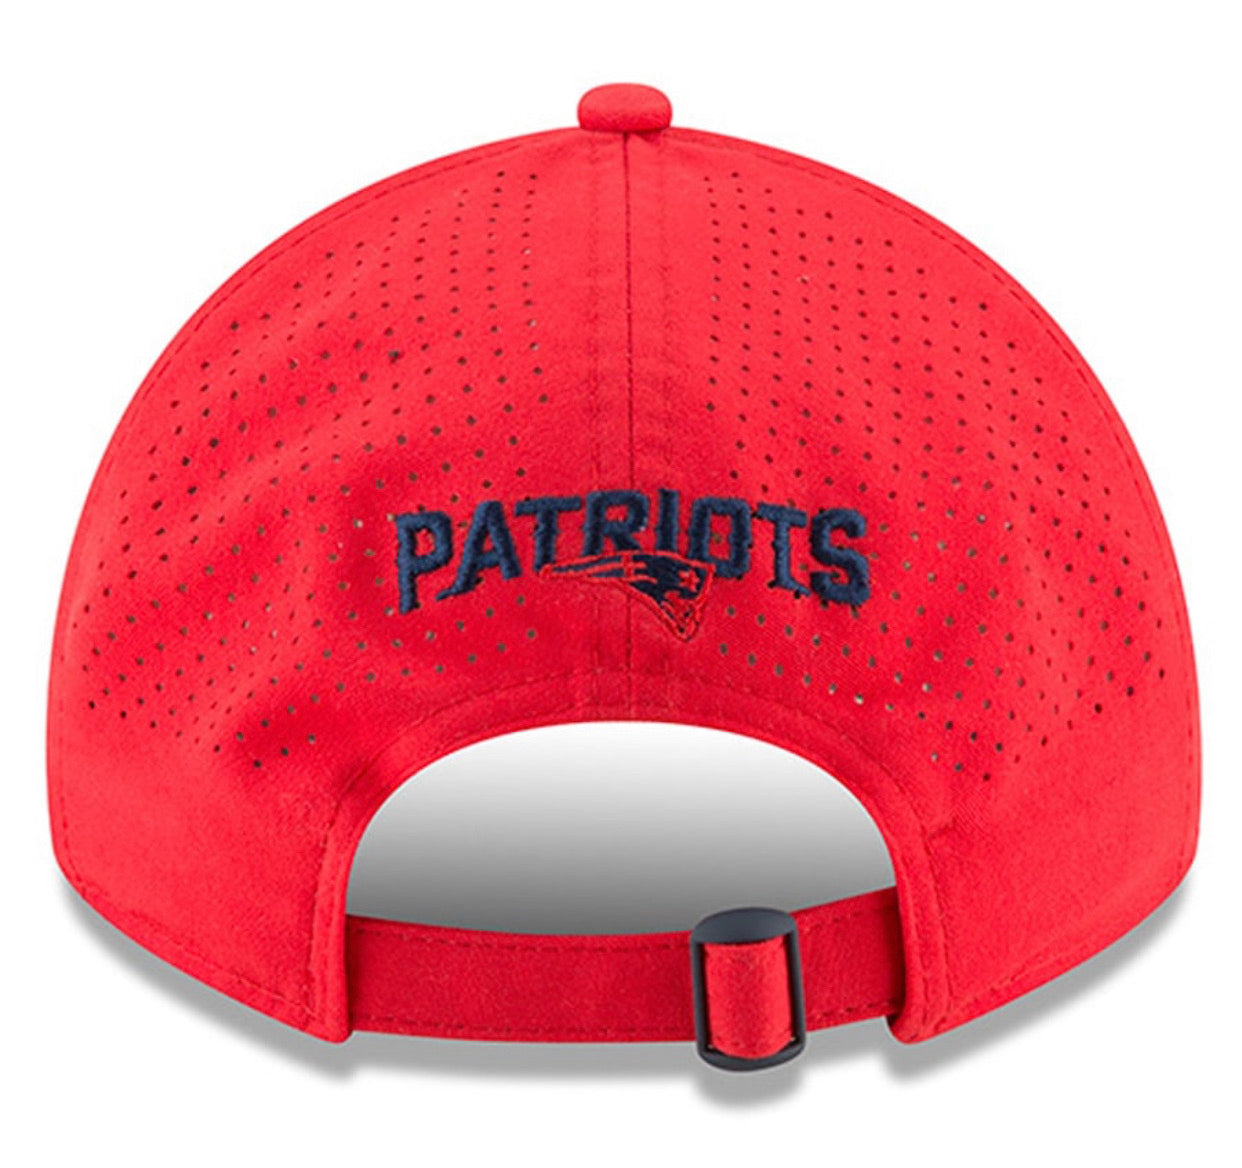 New Era New England Patriots Red 2018 Training Camp Secondary 9TWENTY Adjustable Hat M/L - AtlanticCoastSports